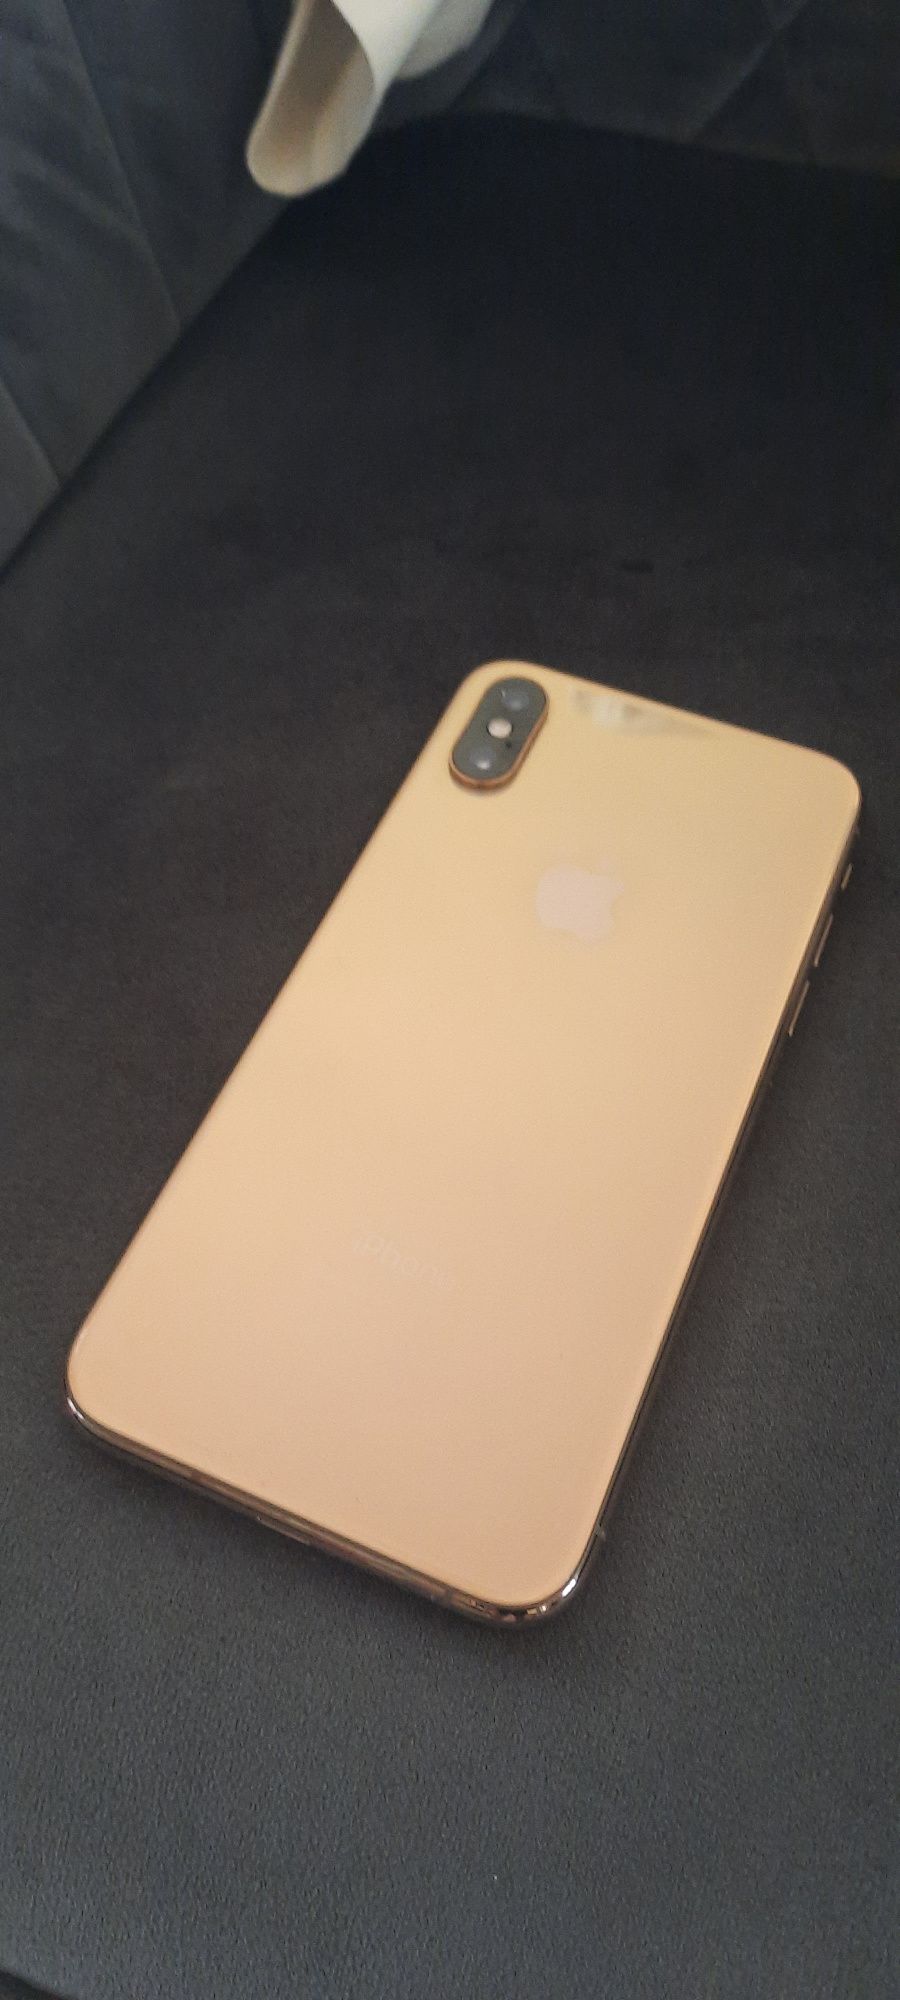 Iphone xs Gold 256 Gb